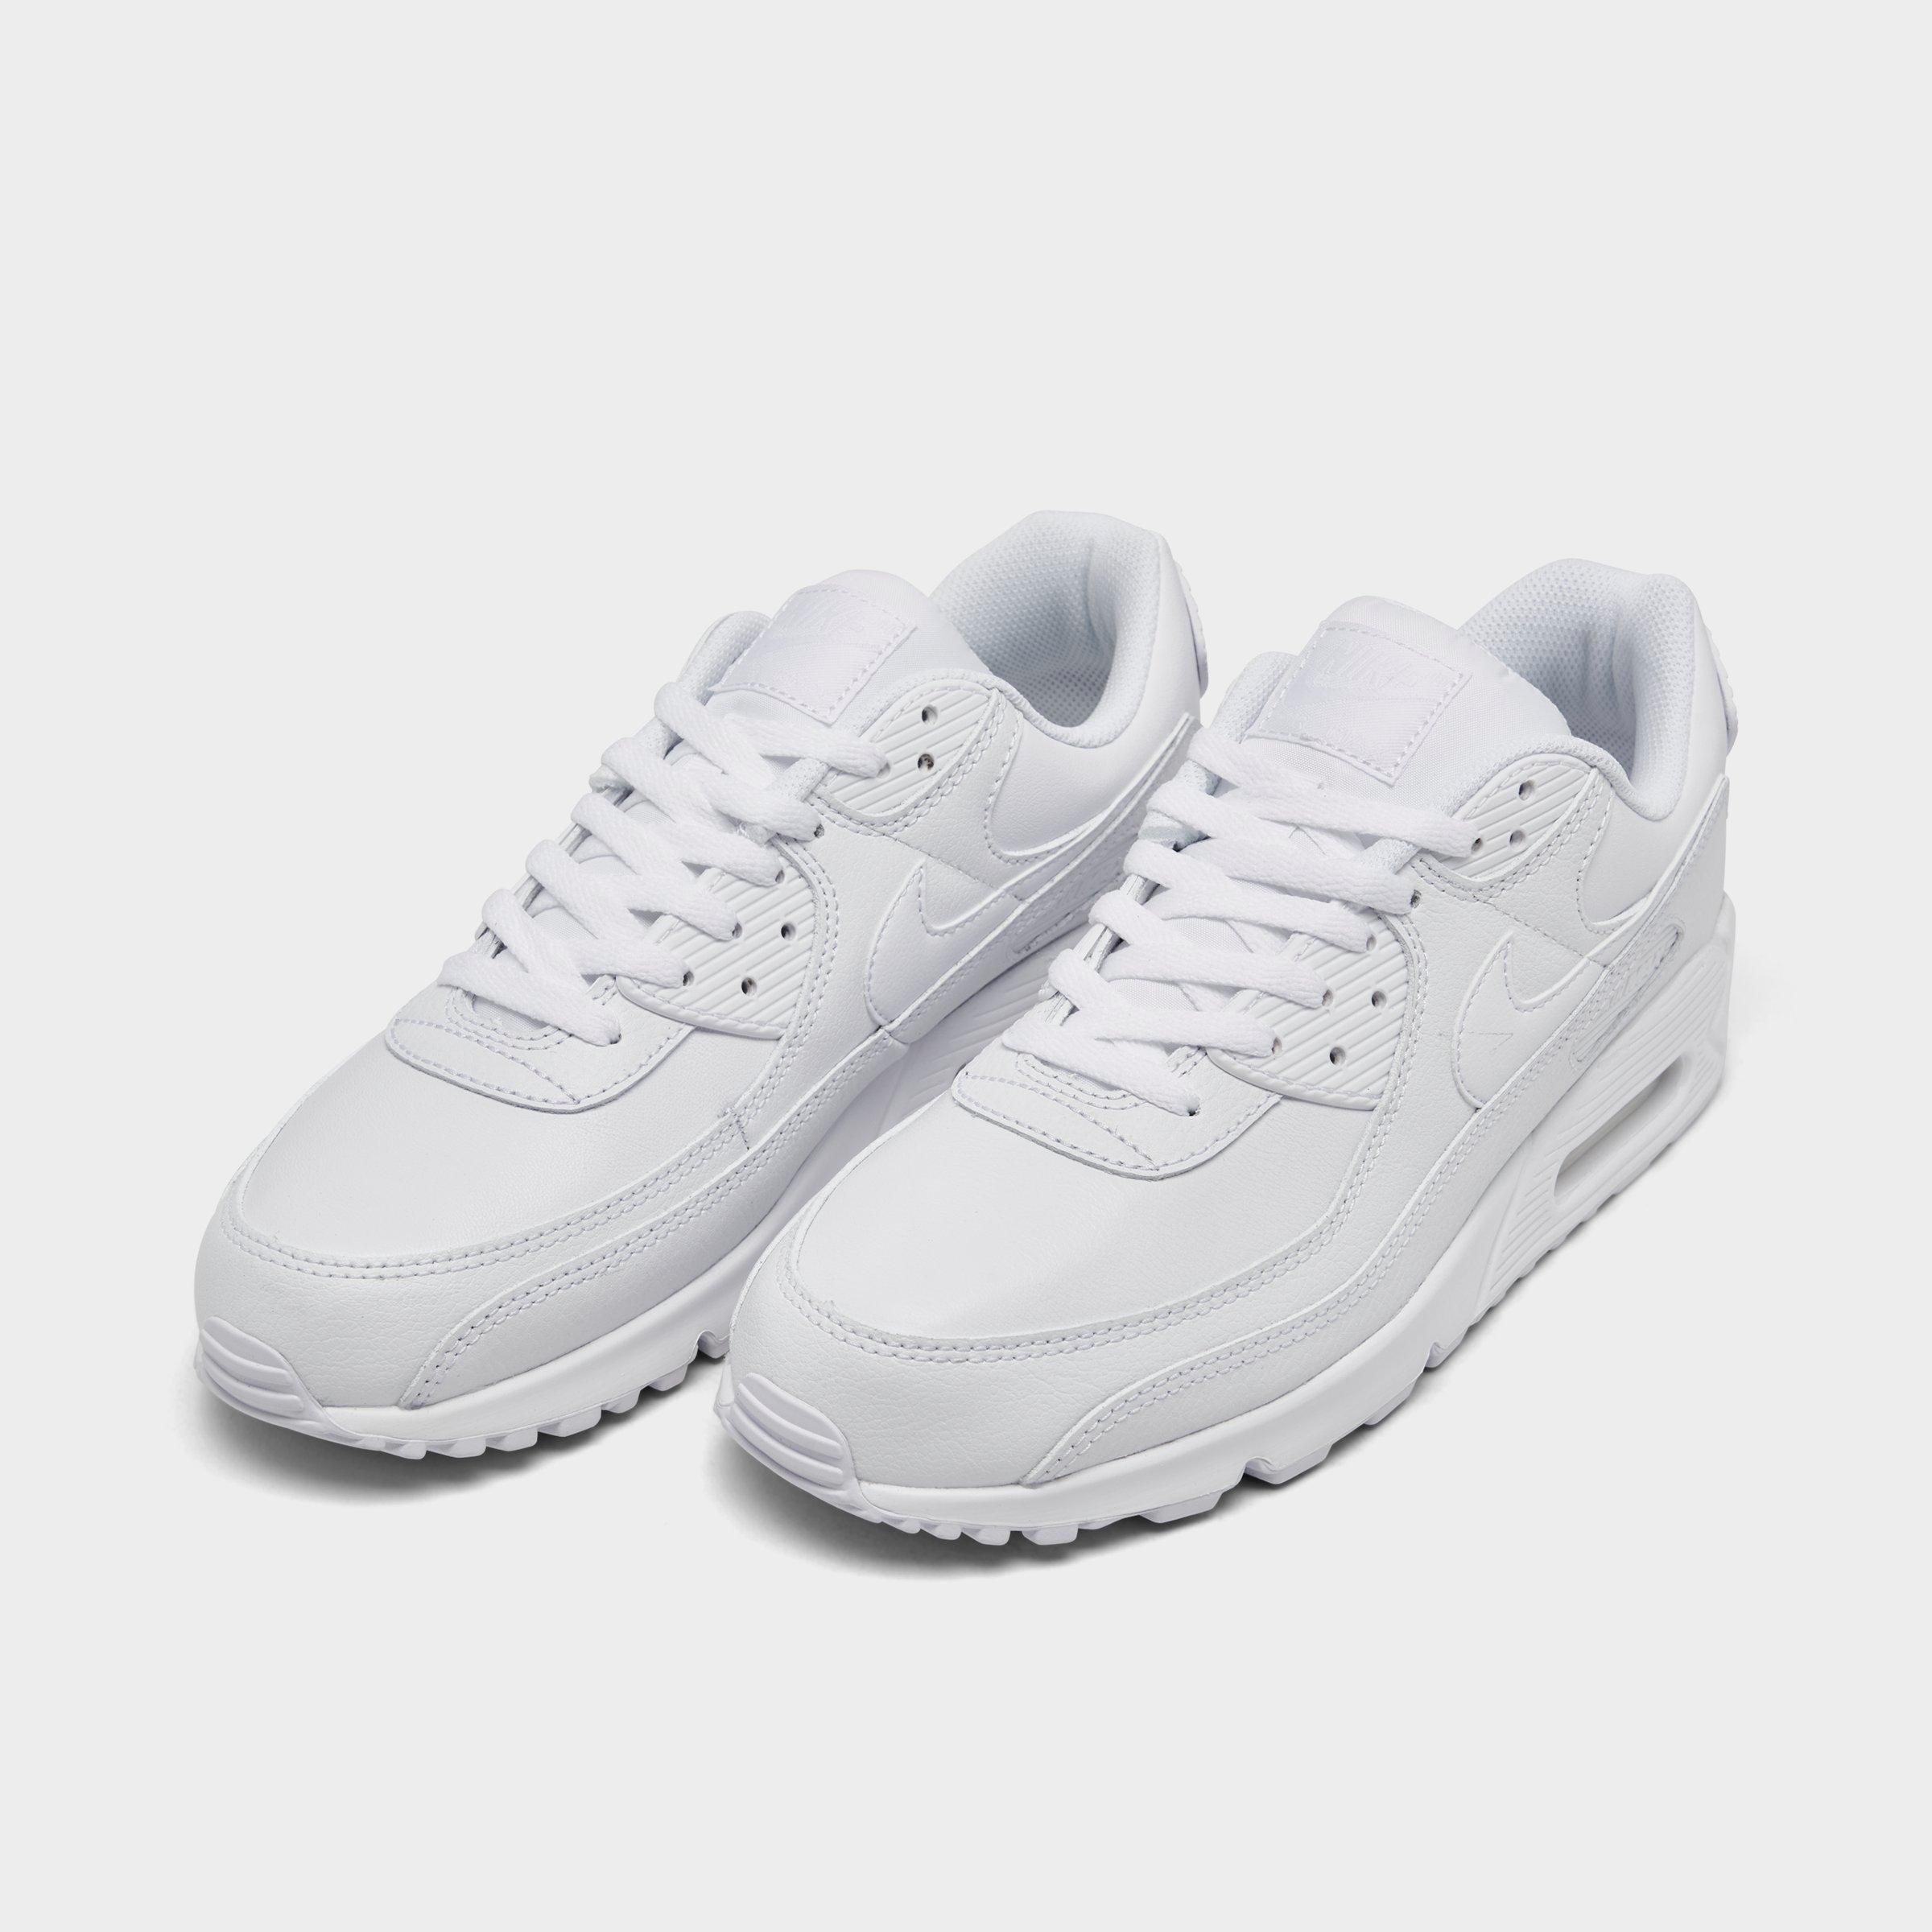 Nike Air Max 90 Leather White Volt (GS)